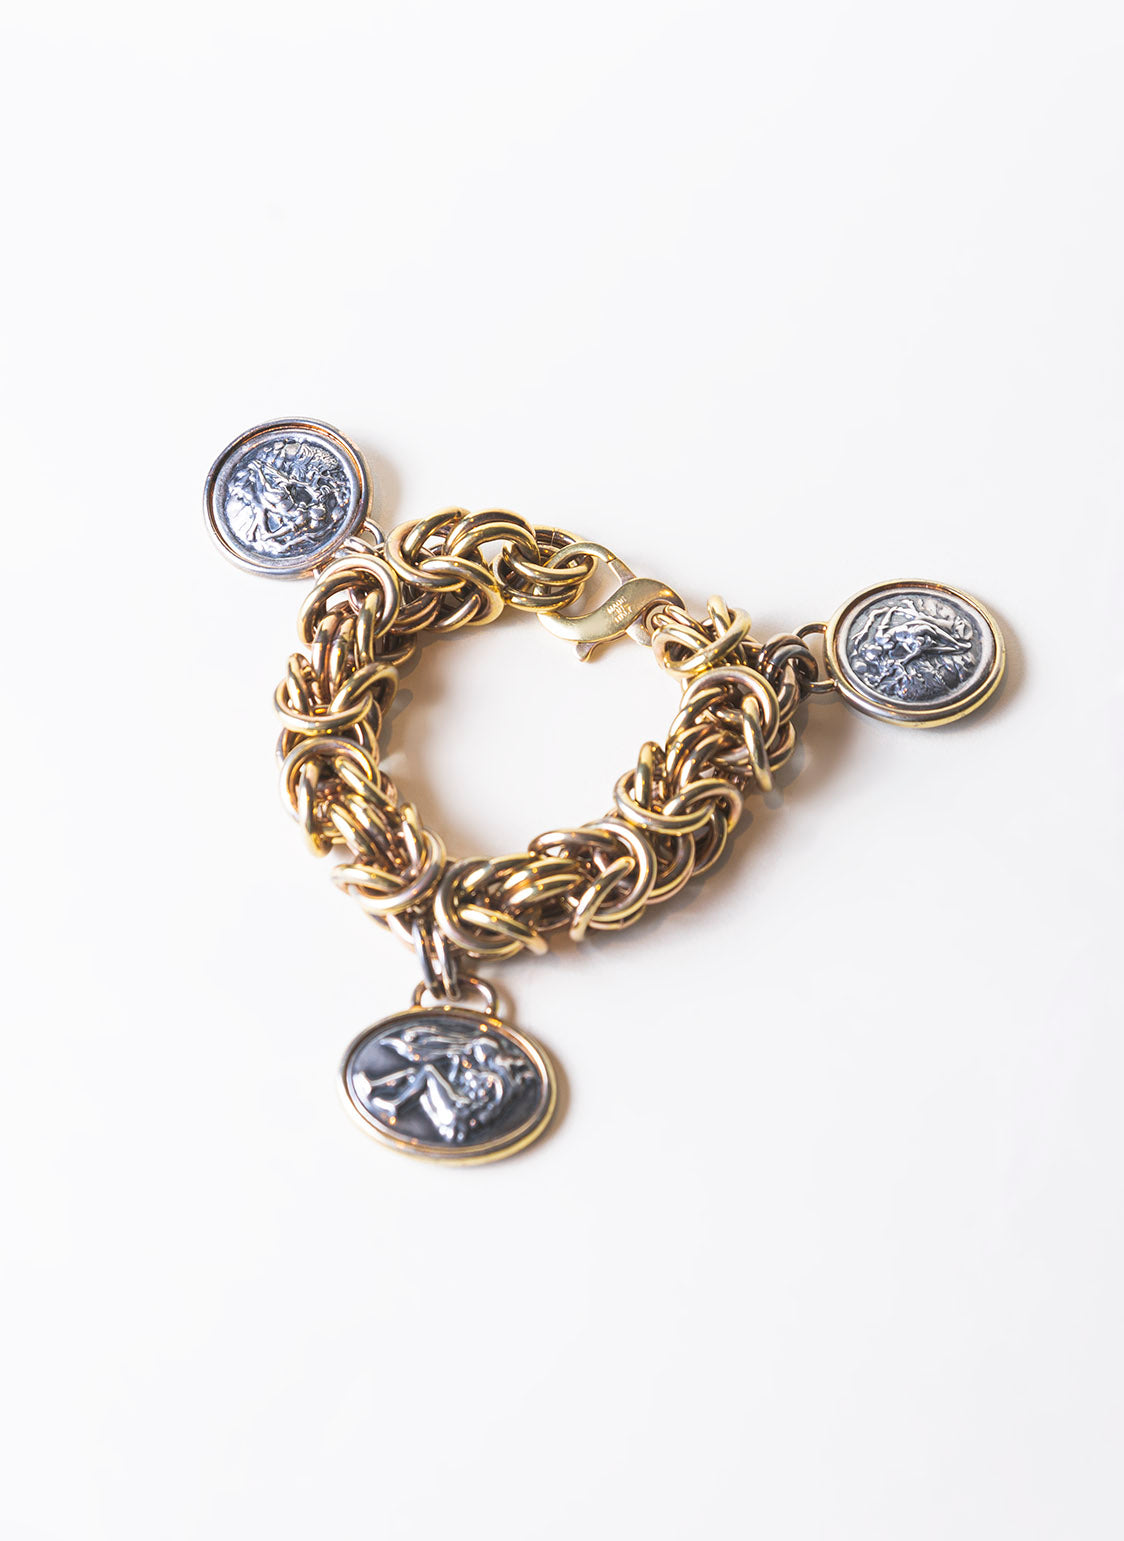 Dante Roman Coins Bracelet in Silver